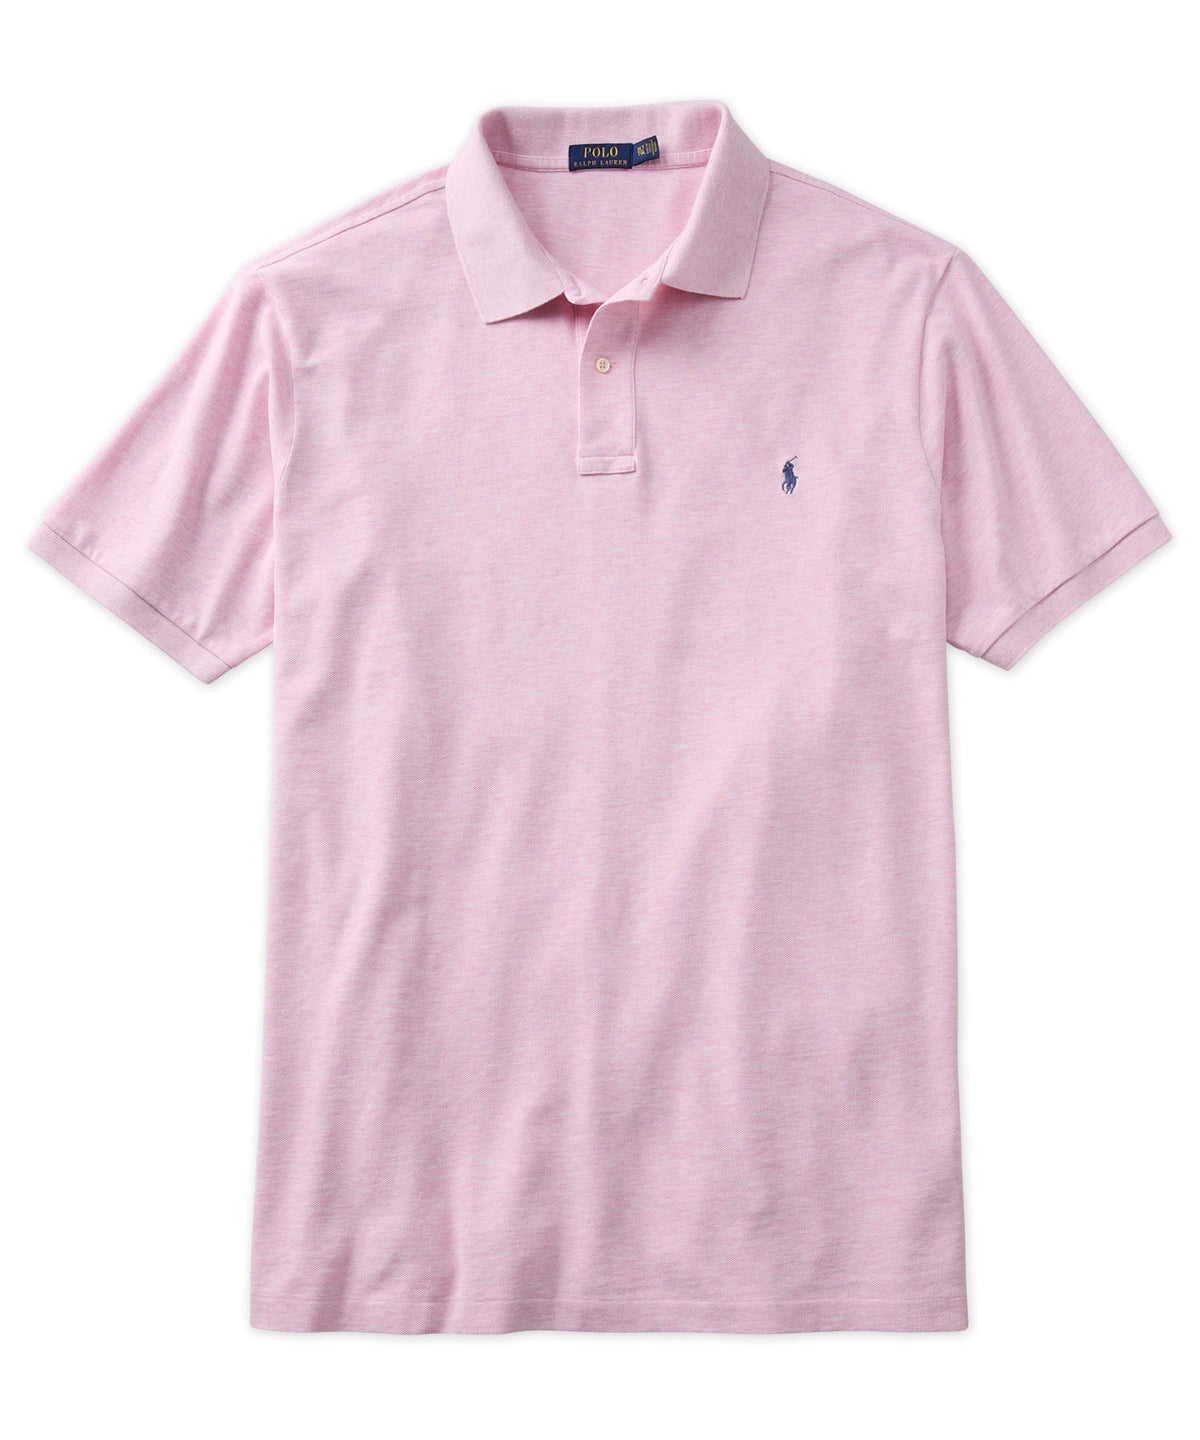 Polo Ralph Lauren Short Sleeve Classic Pique Mesh Polo Shirt, Men's Big & Tall